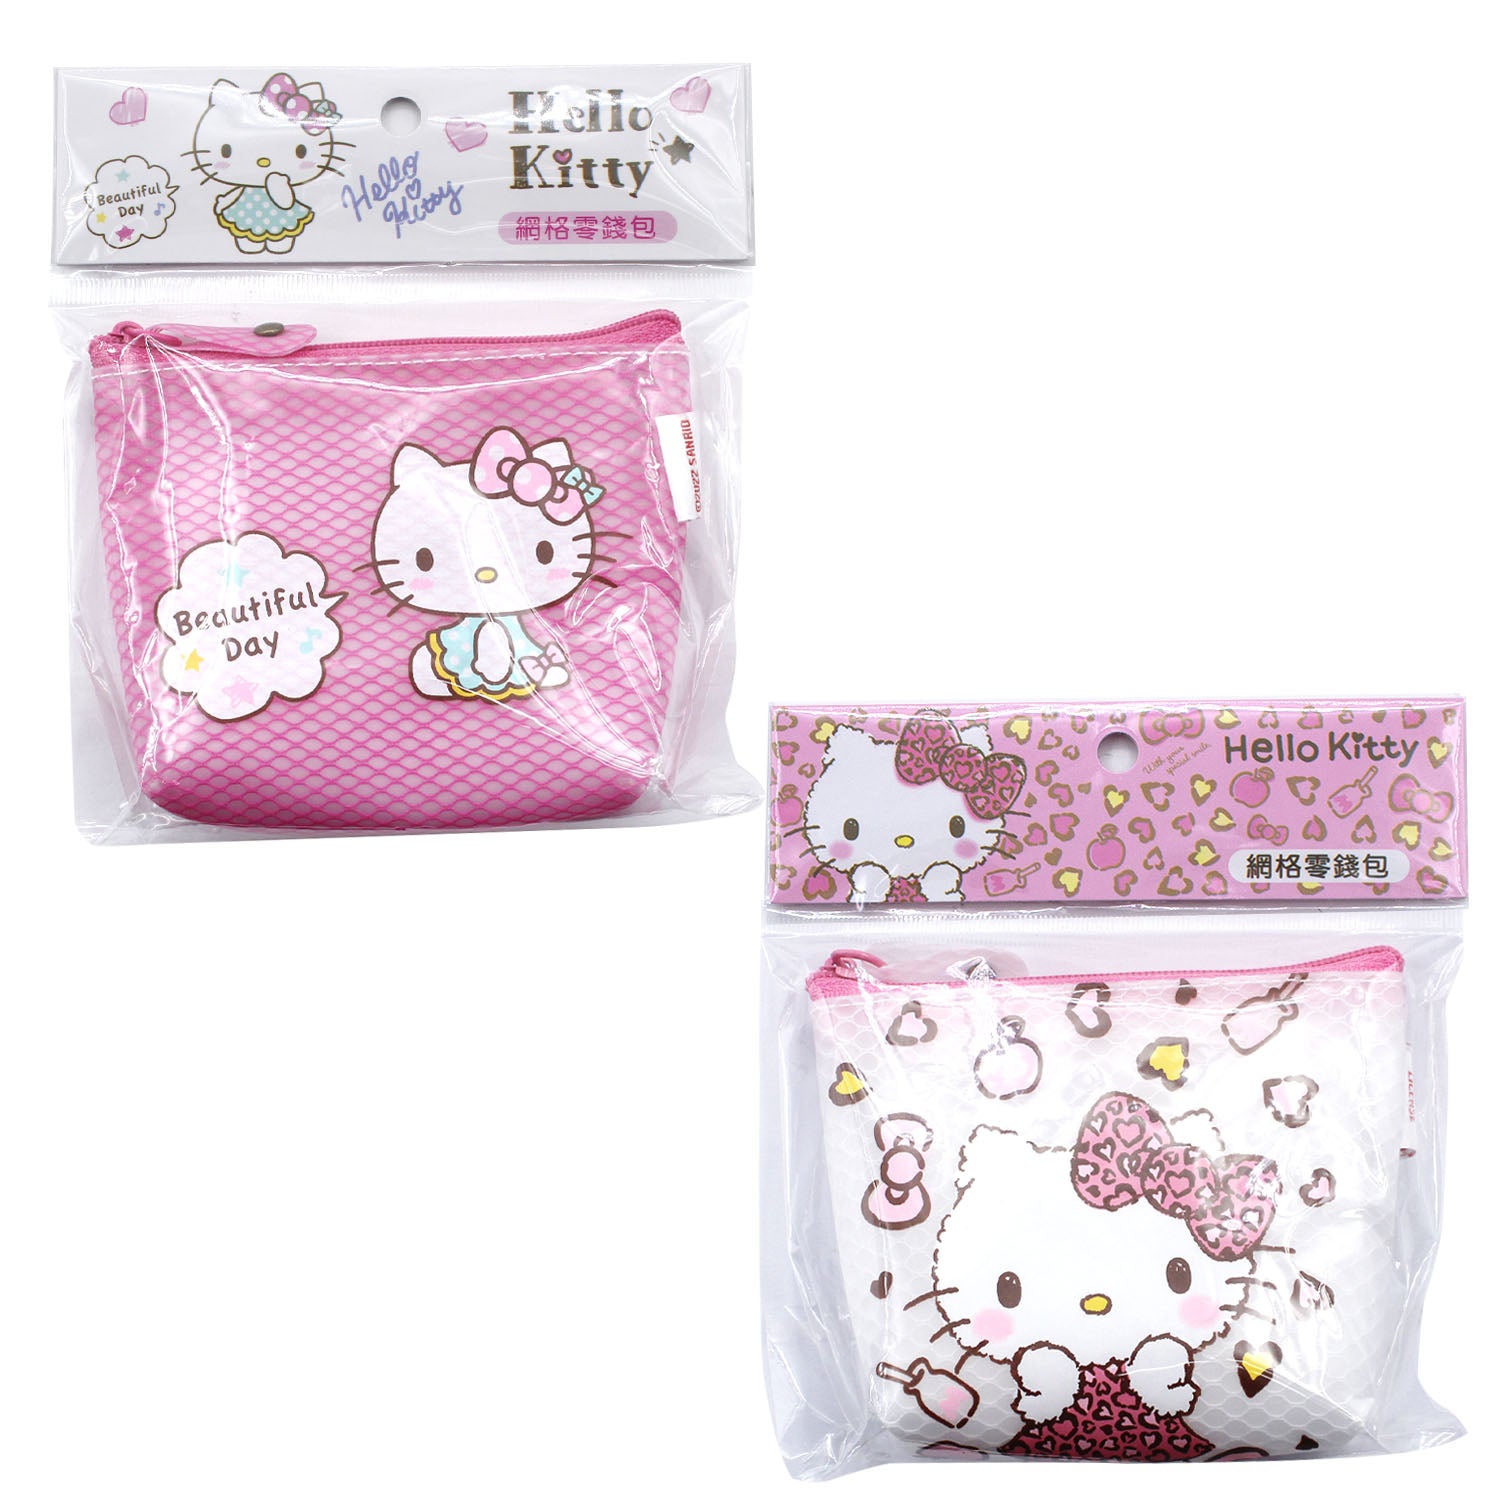 Hello Kitty Purse Bag Plush | Imaginarium Tech & Toys